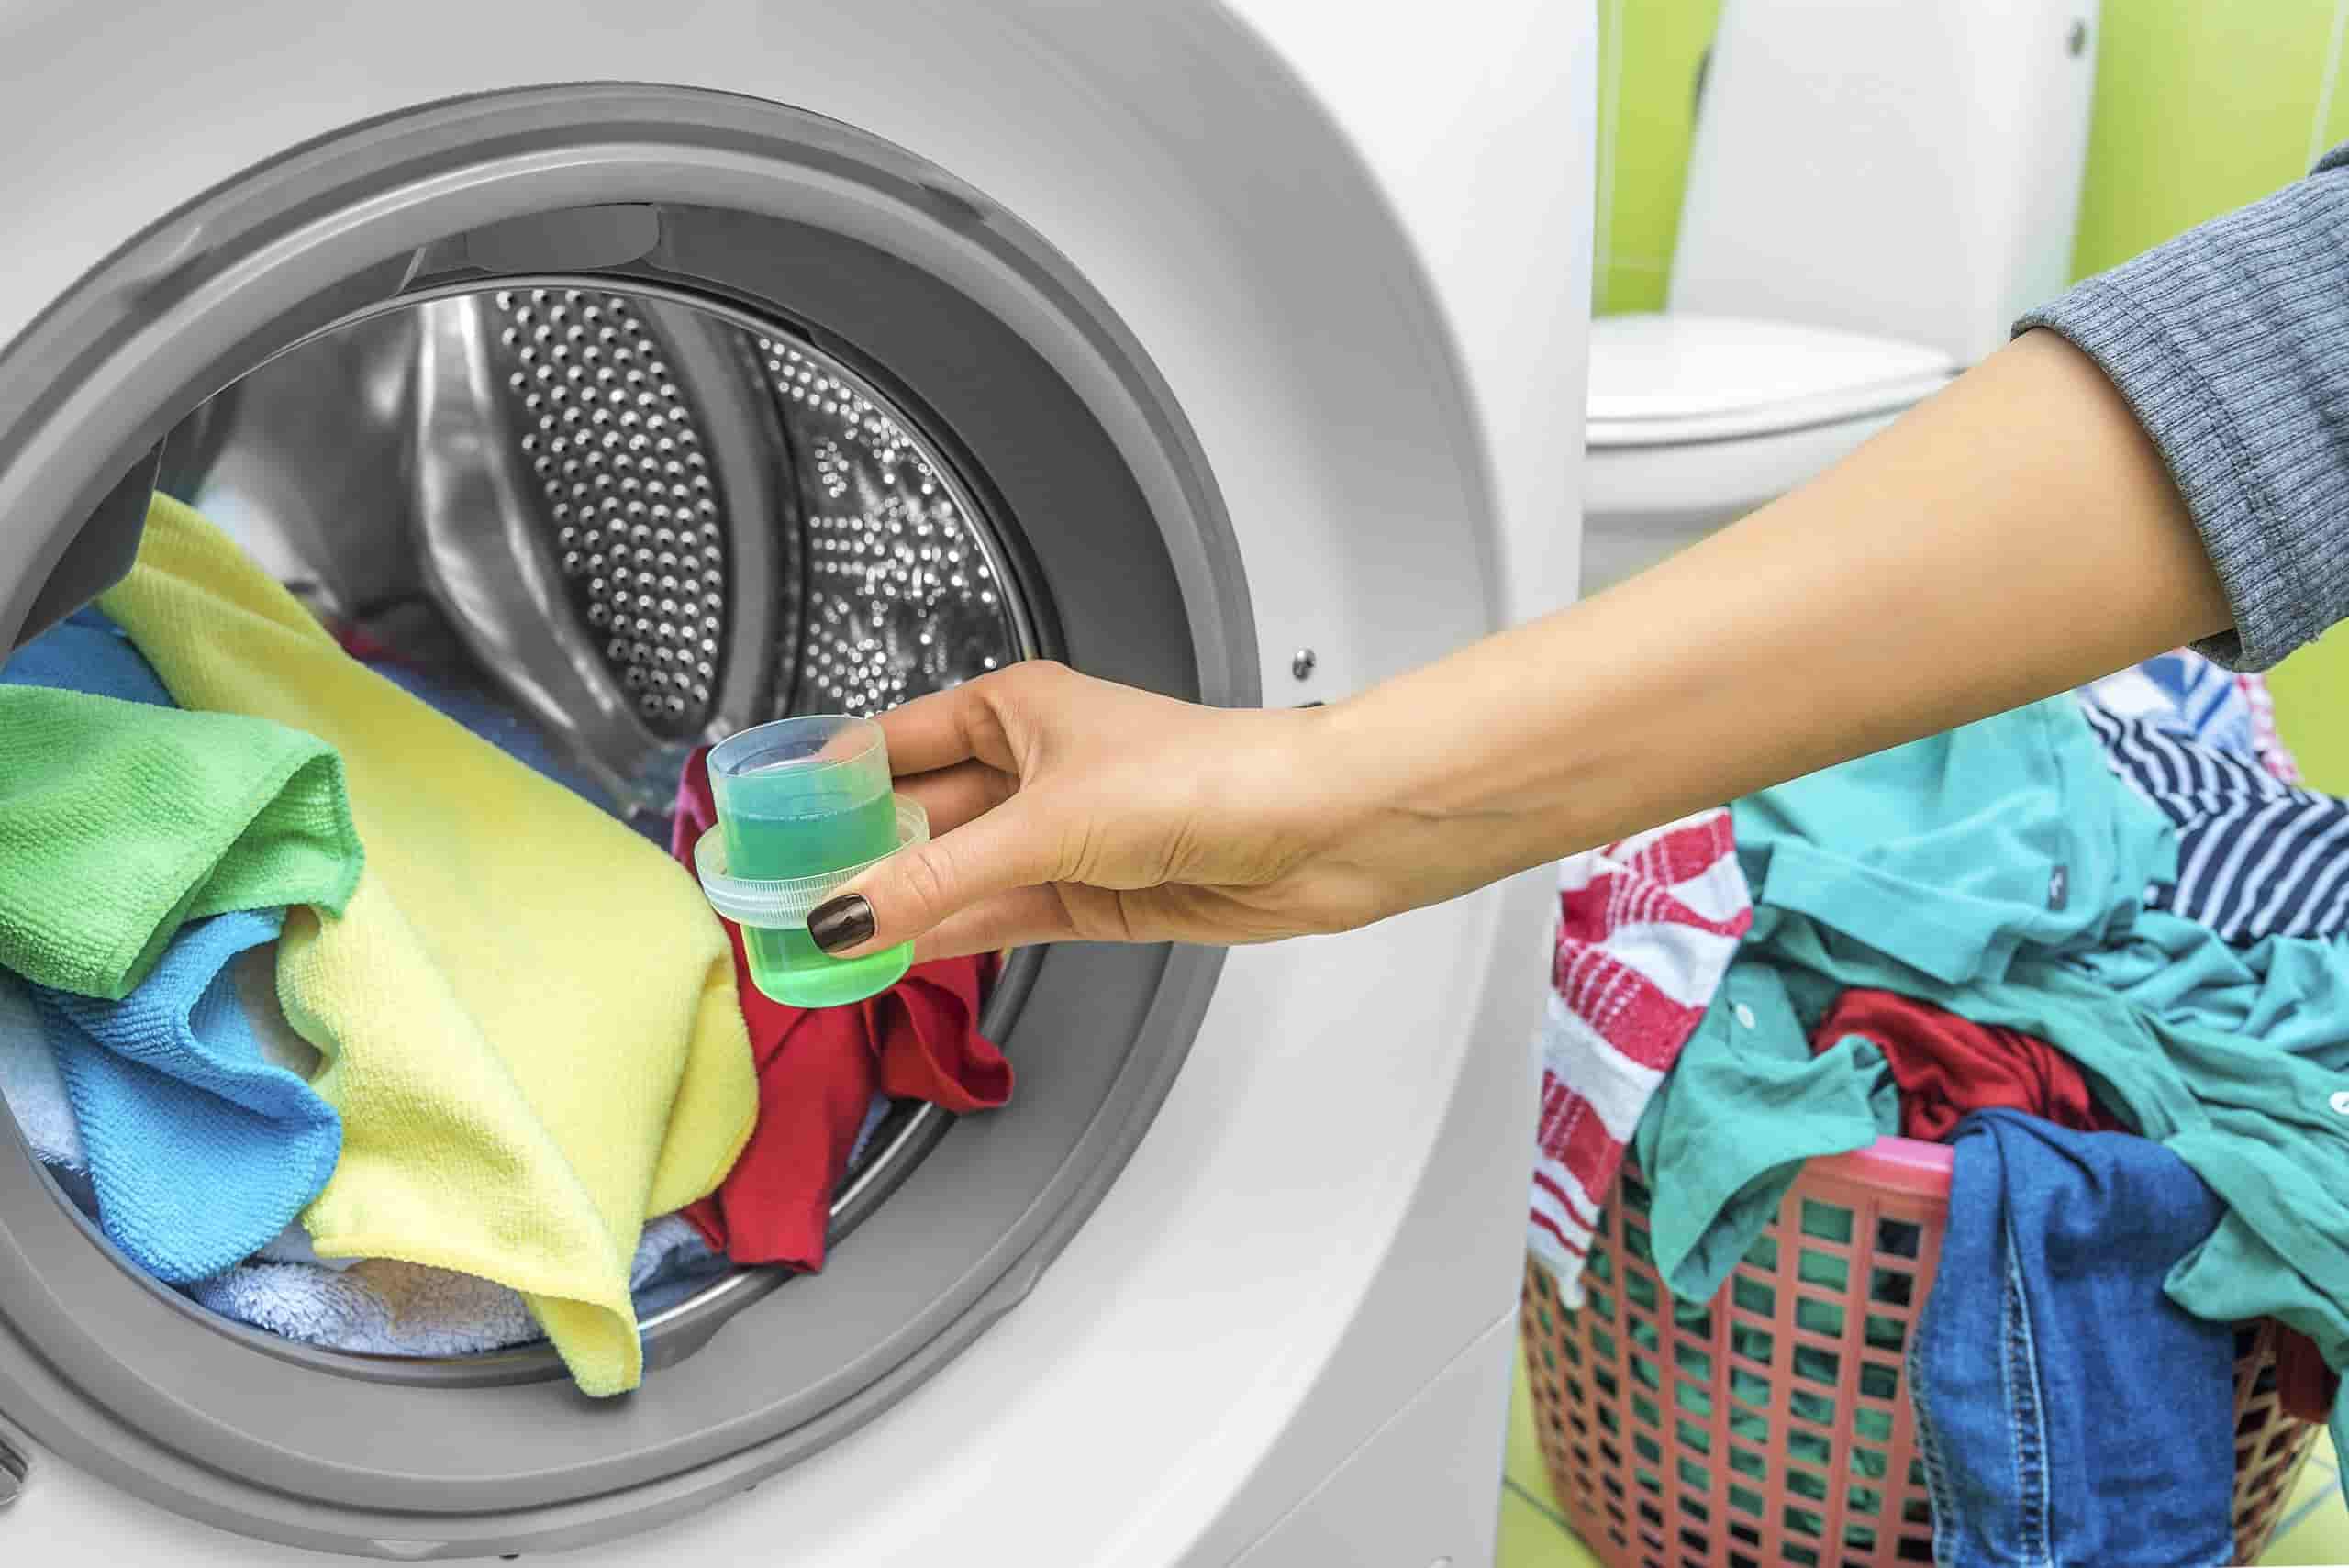 Wholesale Laundry Detergent Manufacturers